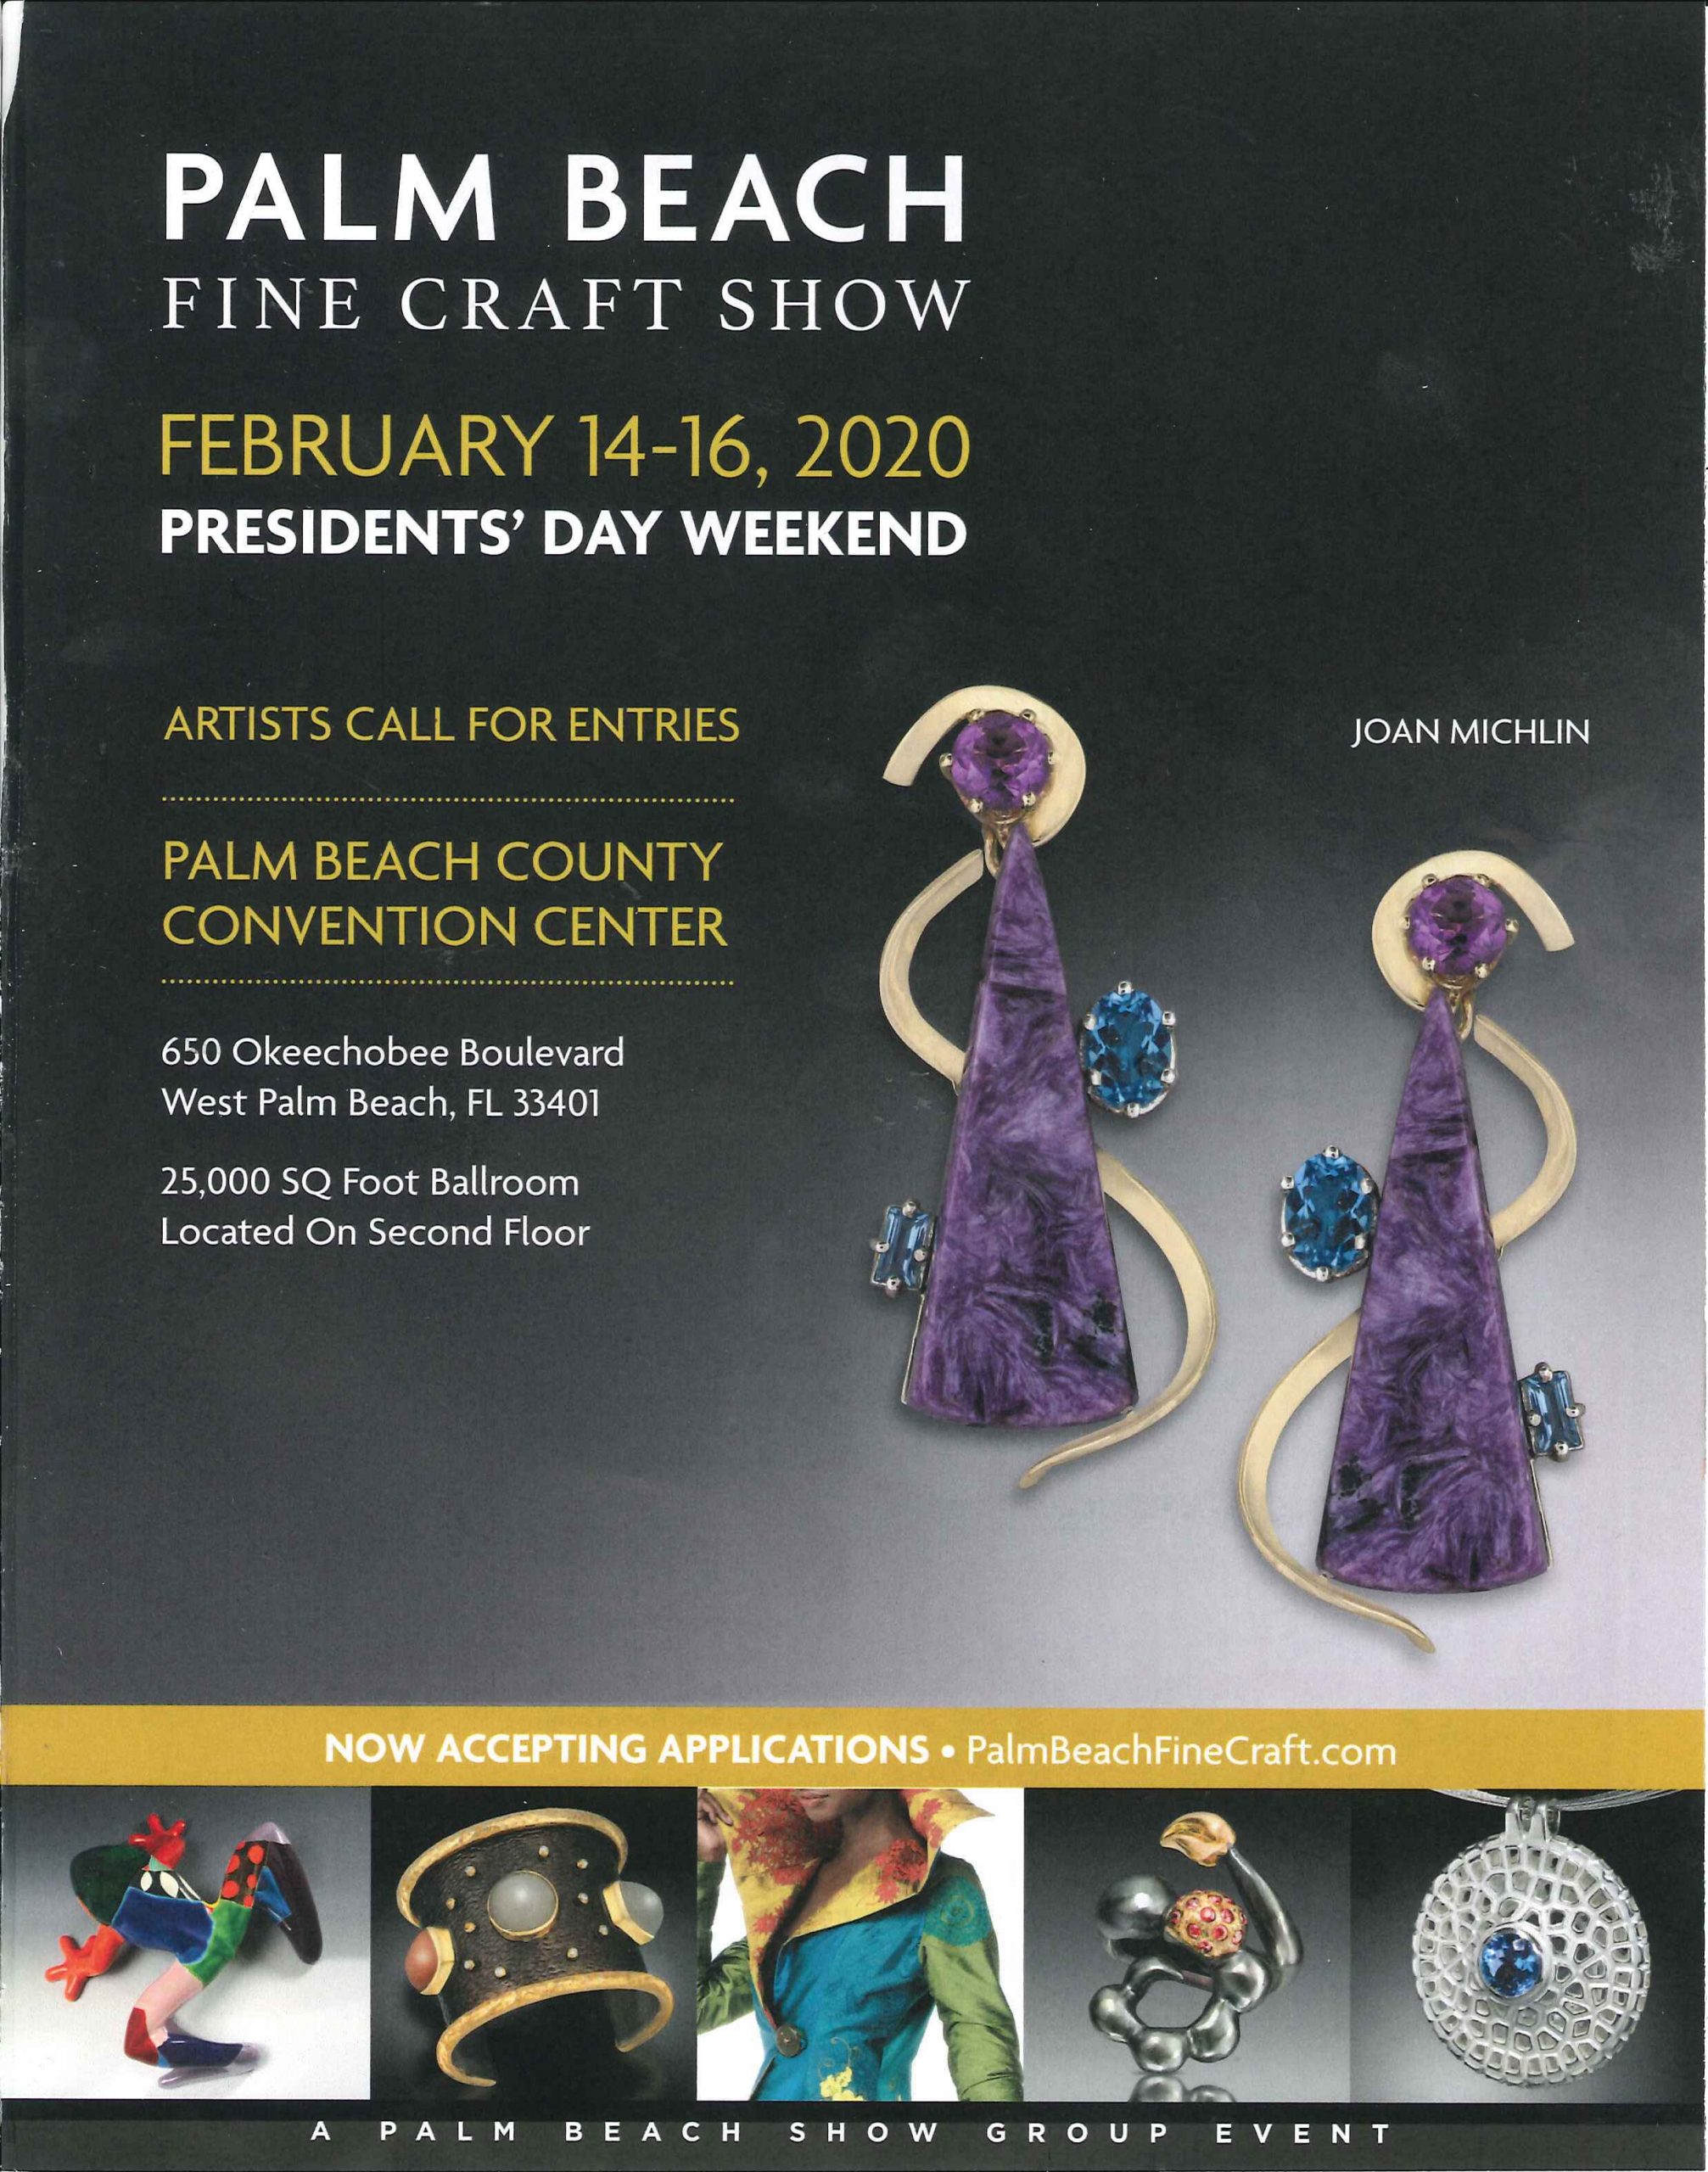 American Craft Magazine Aug/Sept 2019 Palm Beach Fine Craft Show